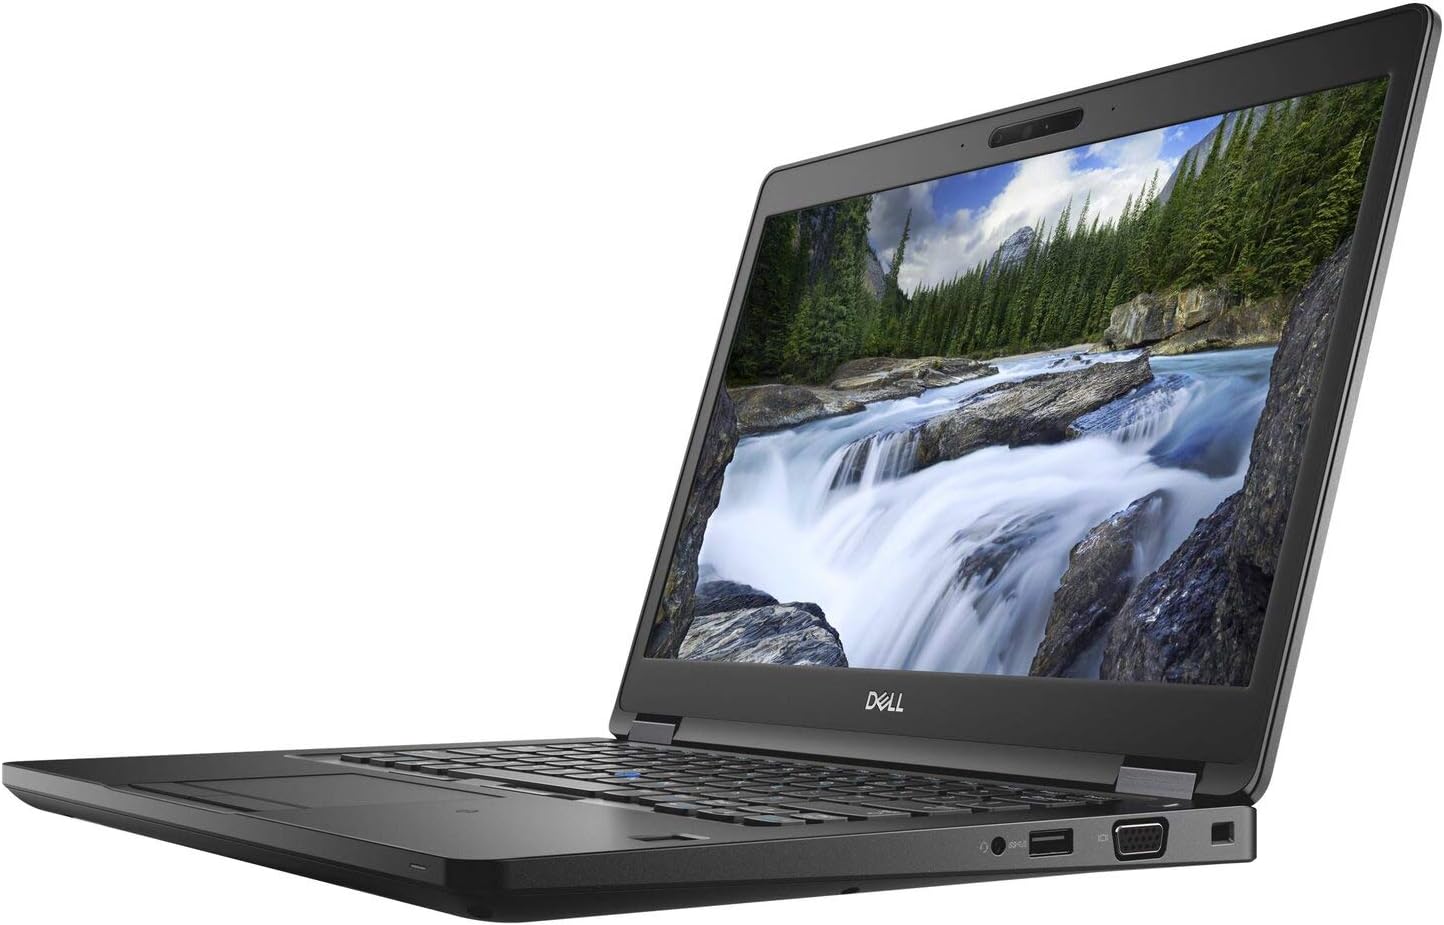 Dell Latitude 5591 Laptop PC 15.6 inch Laptop PC, Intel Core i5-8400H Processor, 8GB Ram, 256GB SSD, Webcam, Thunderbolt, HDMI, Windows 10 (Renewed)